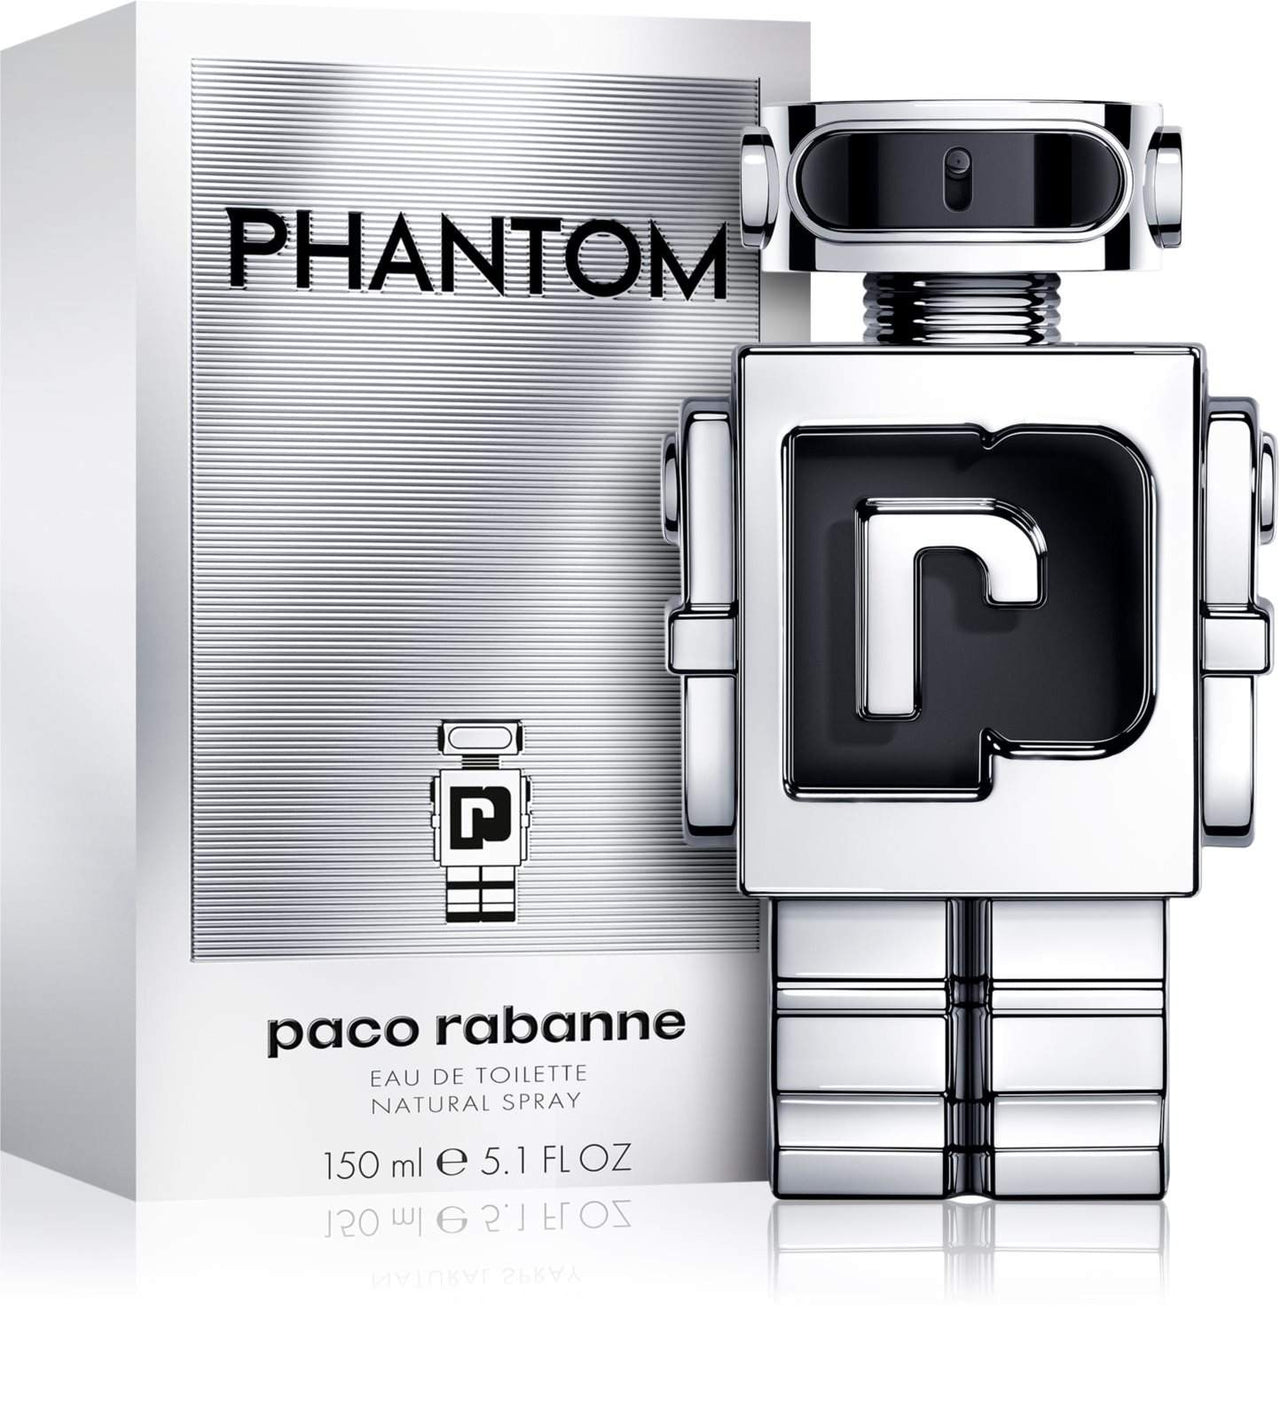 Phantom Paco Rabanne - Hombre